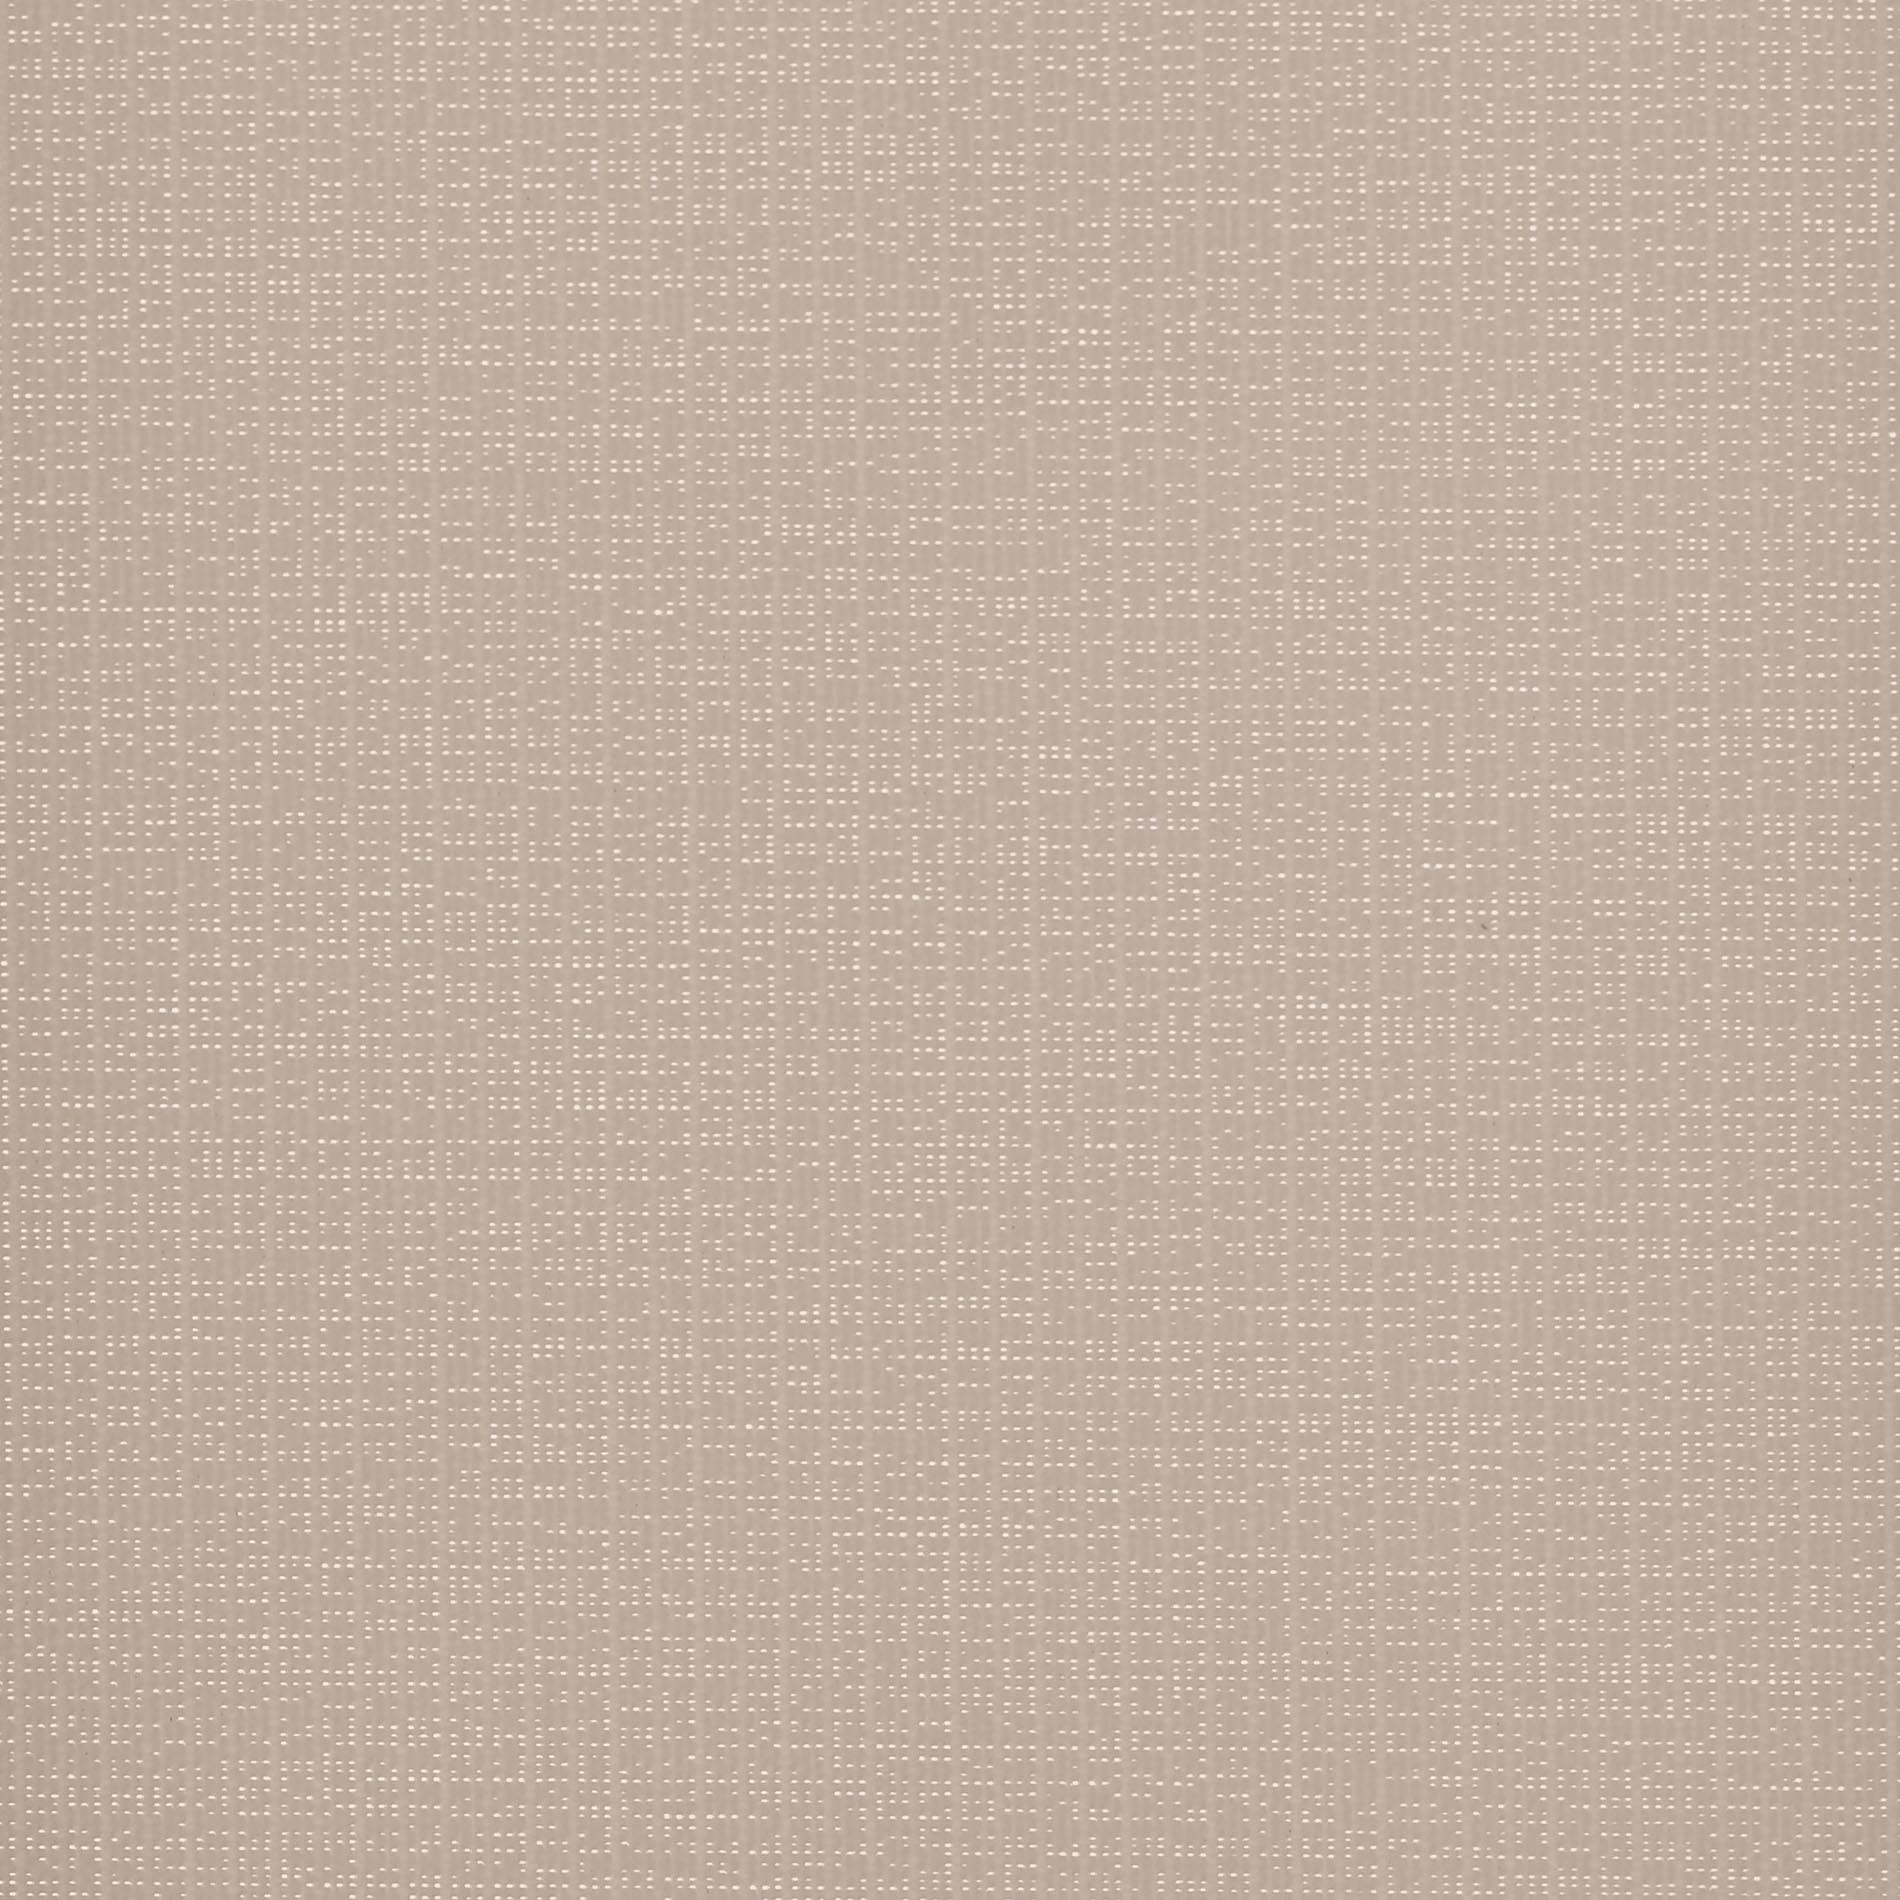 Altex - Fabric - SOLTIS PERFORM 92 - Sandy beige - 92-2135